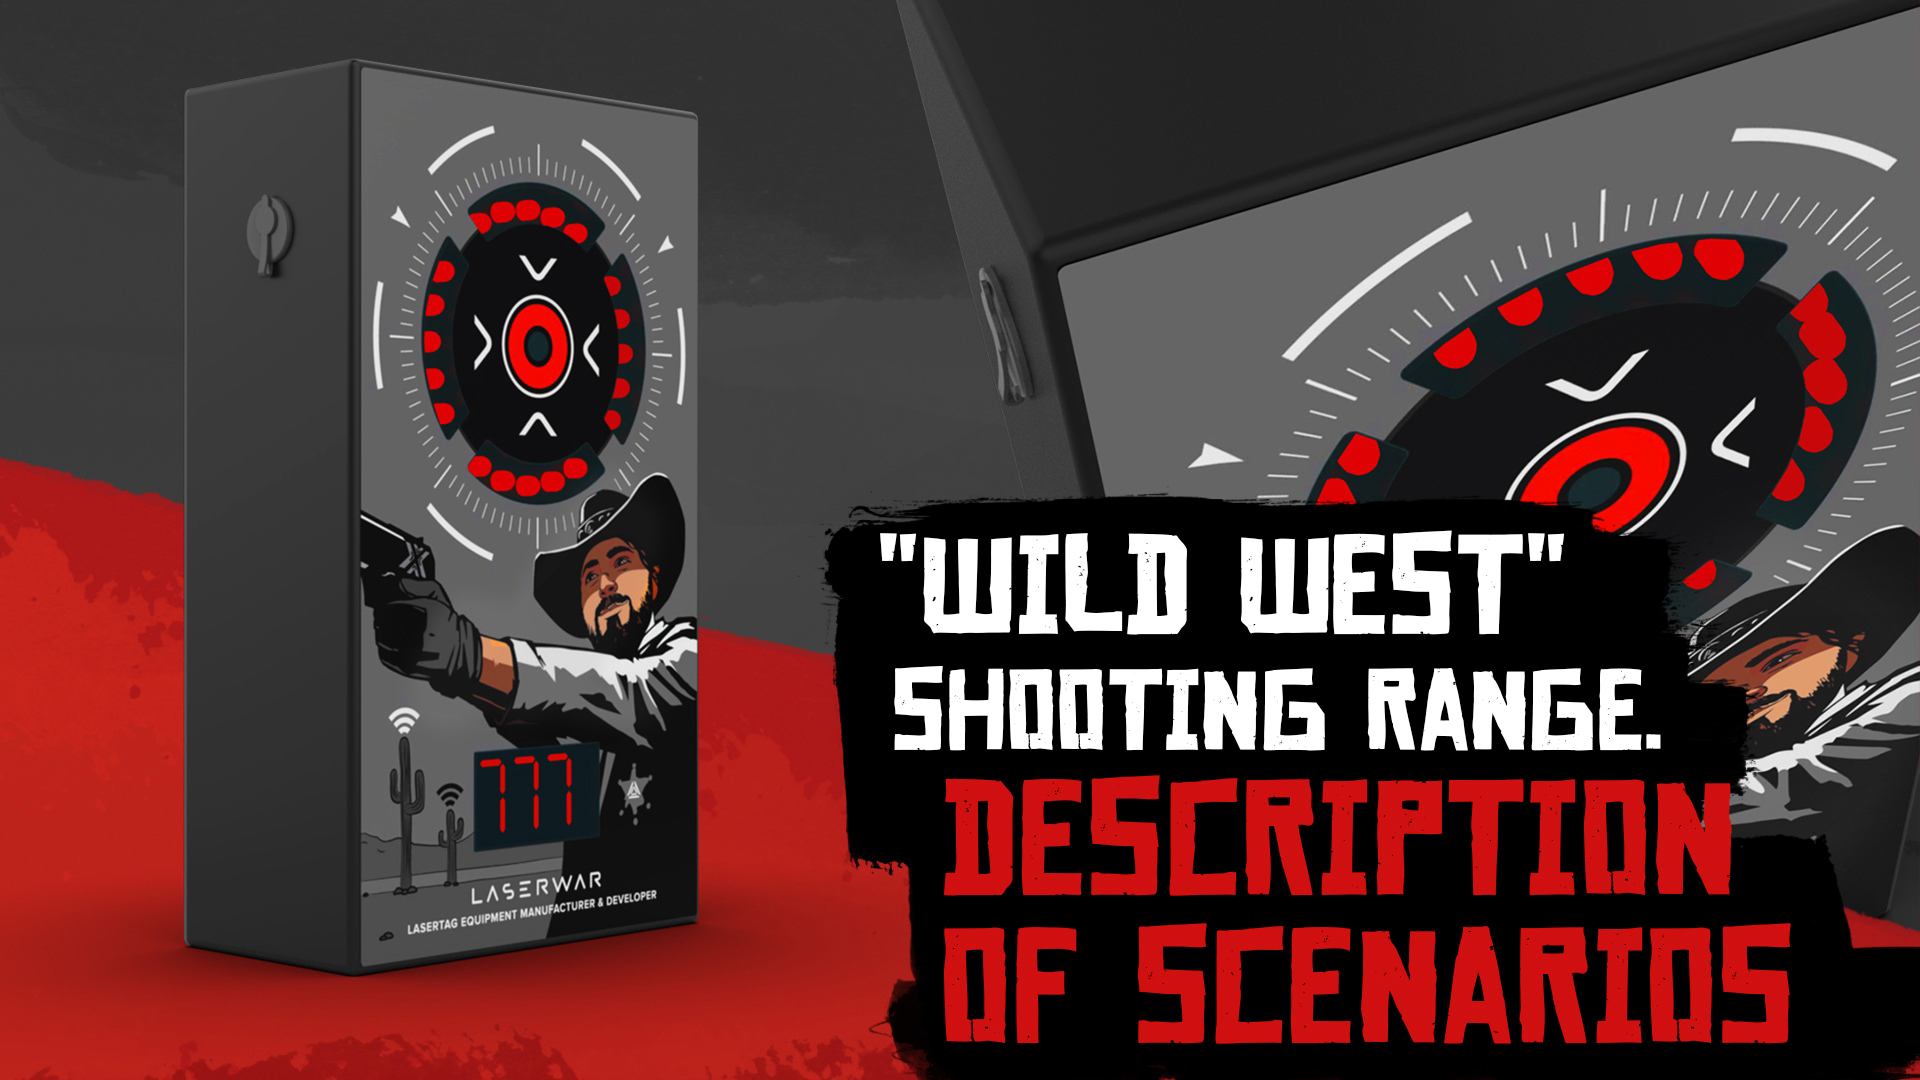 Wild West shooting range. Description of scenarios